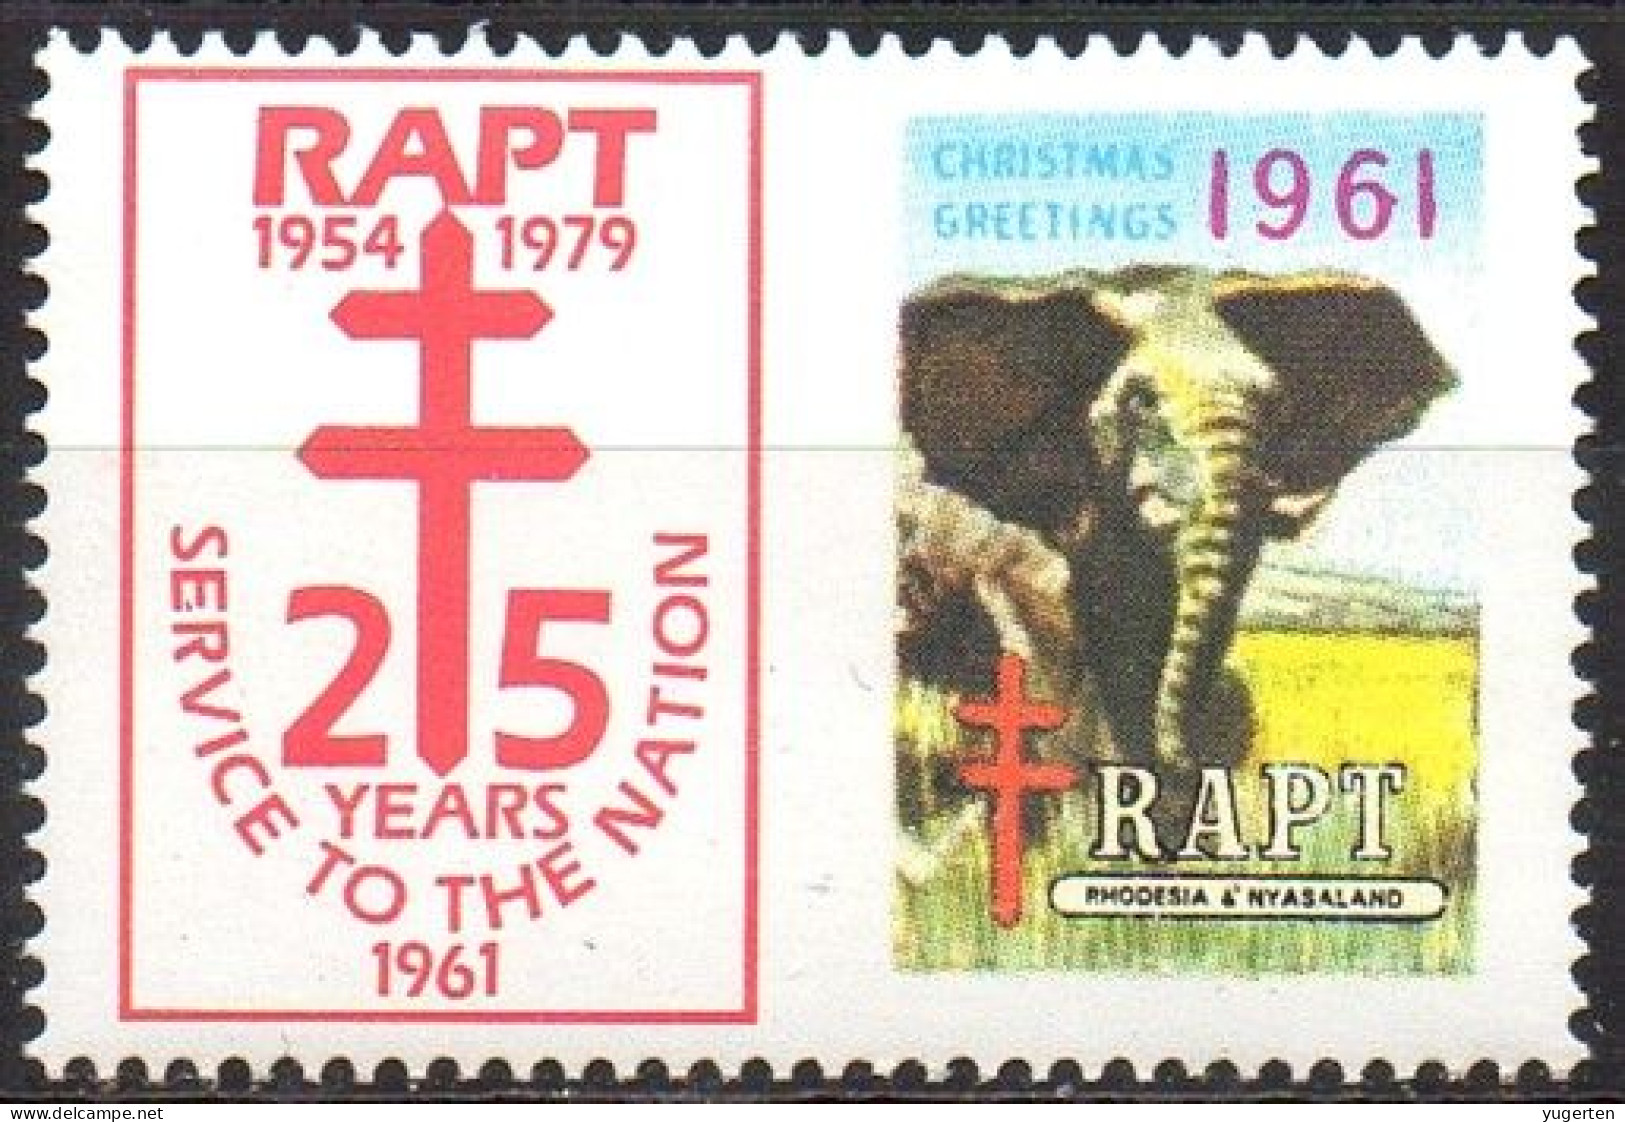 RODHESIA 1961 - Label - Local Post - RAPT - Elephants  Elephants Elefanten Elefantes Elefanti Fauna Animals Mammals - Elefanten